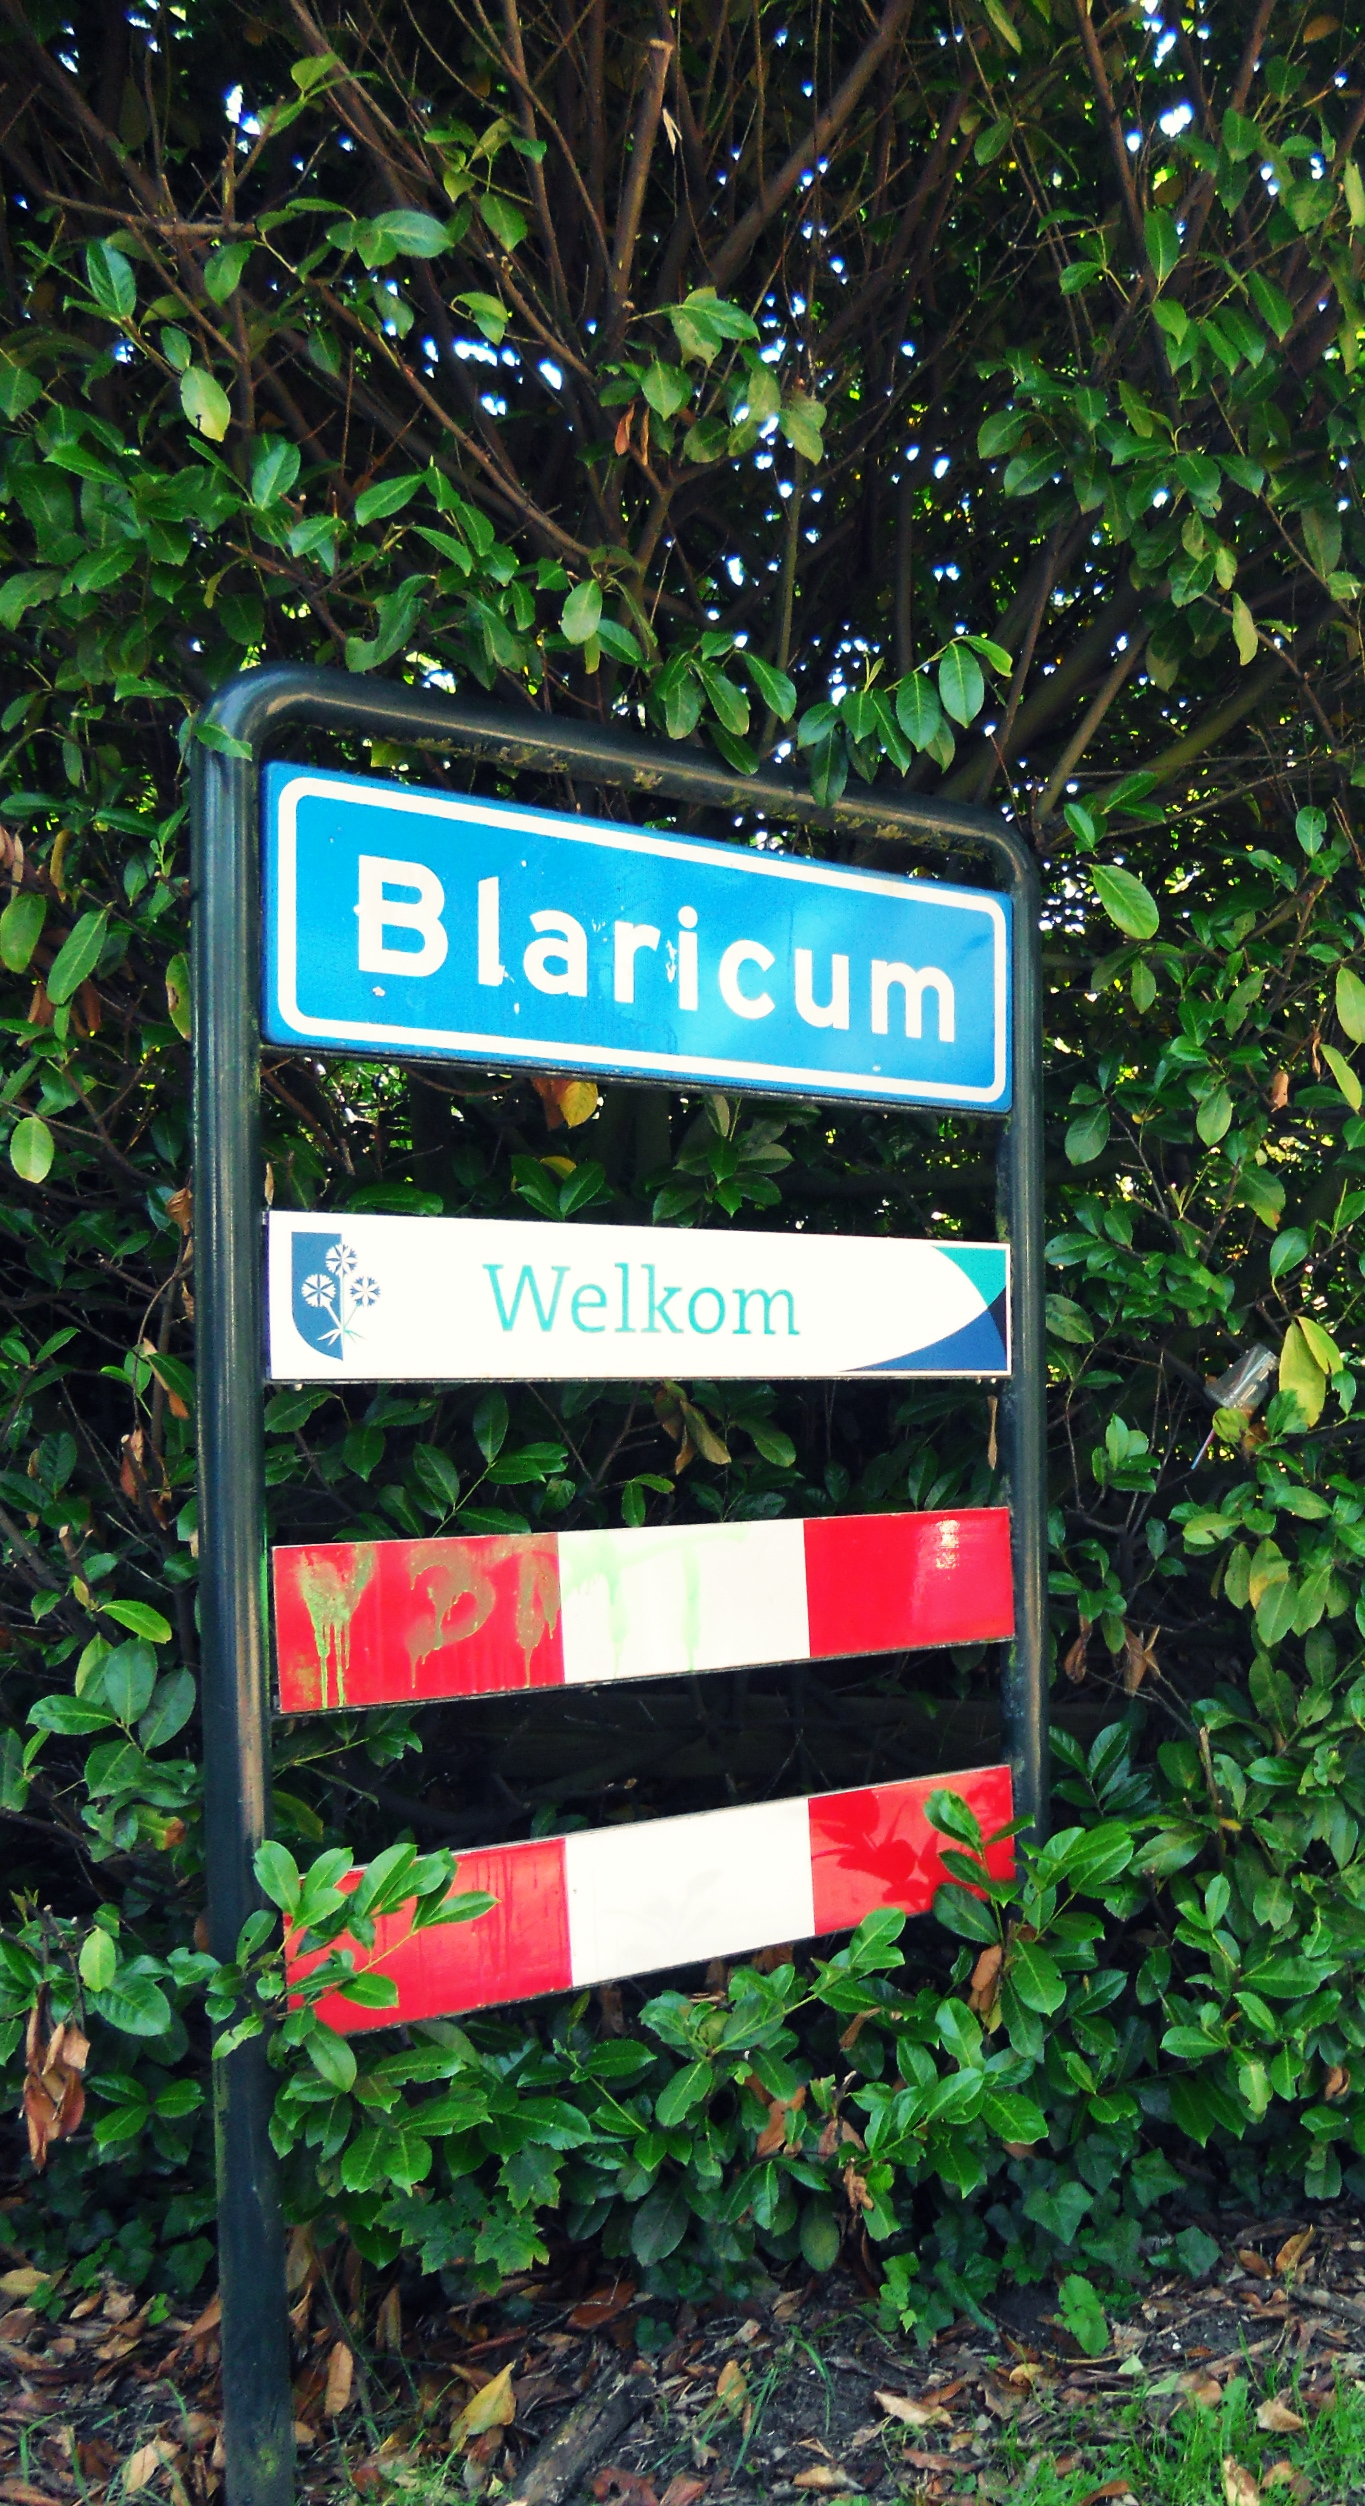 Wekom in Blaricum